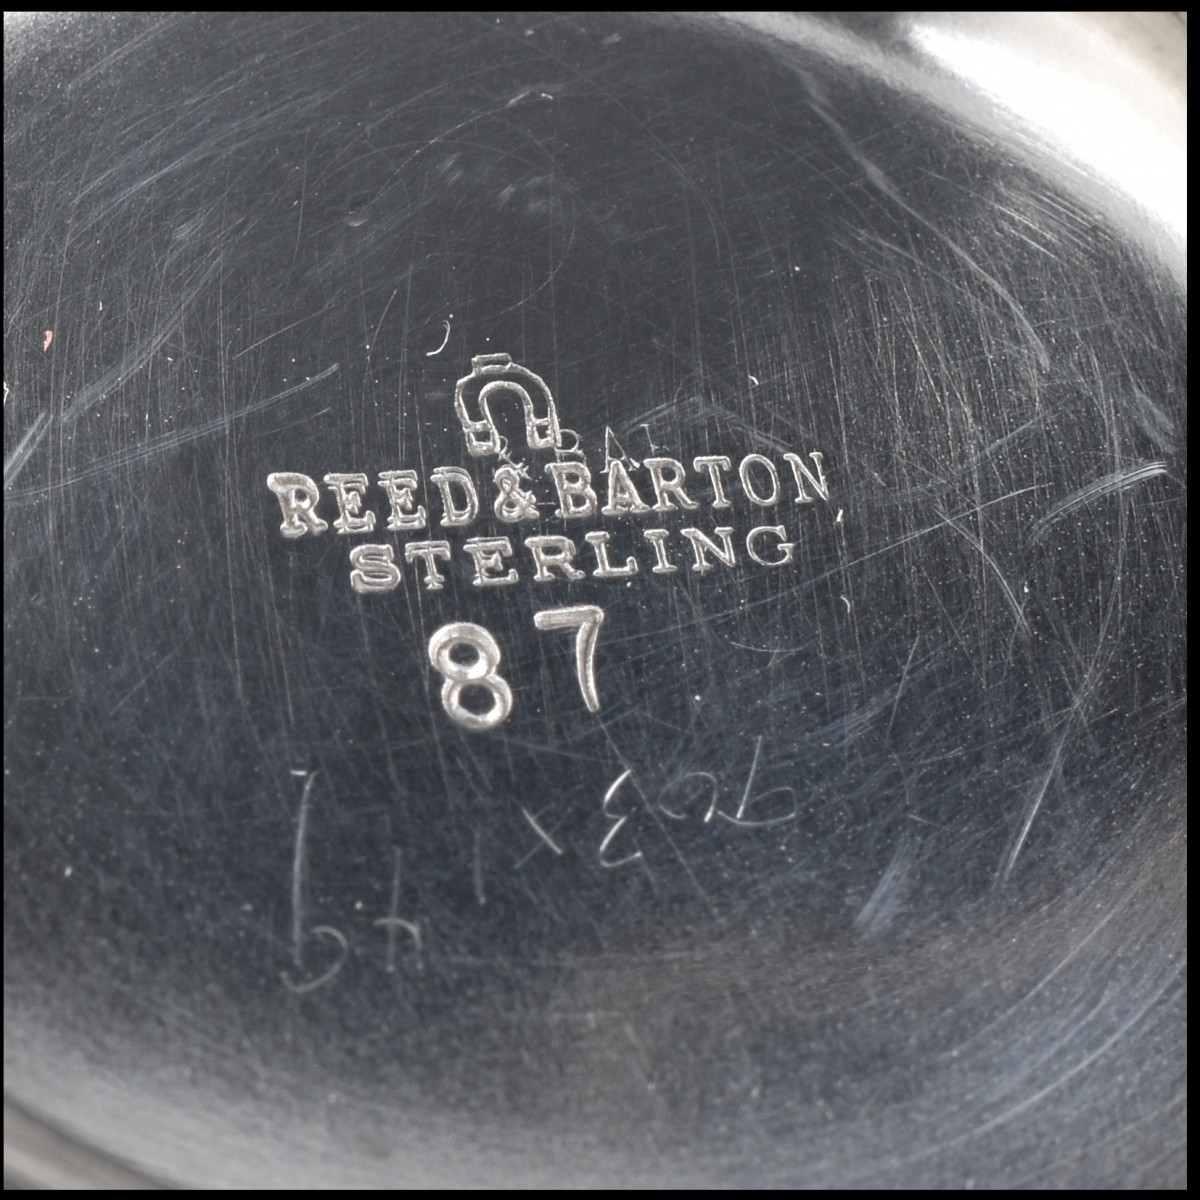 Reed & Barton 5 PC Pointed Antique Silver Tea Set